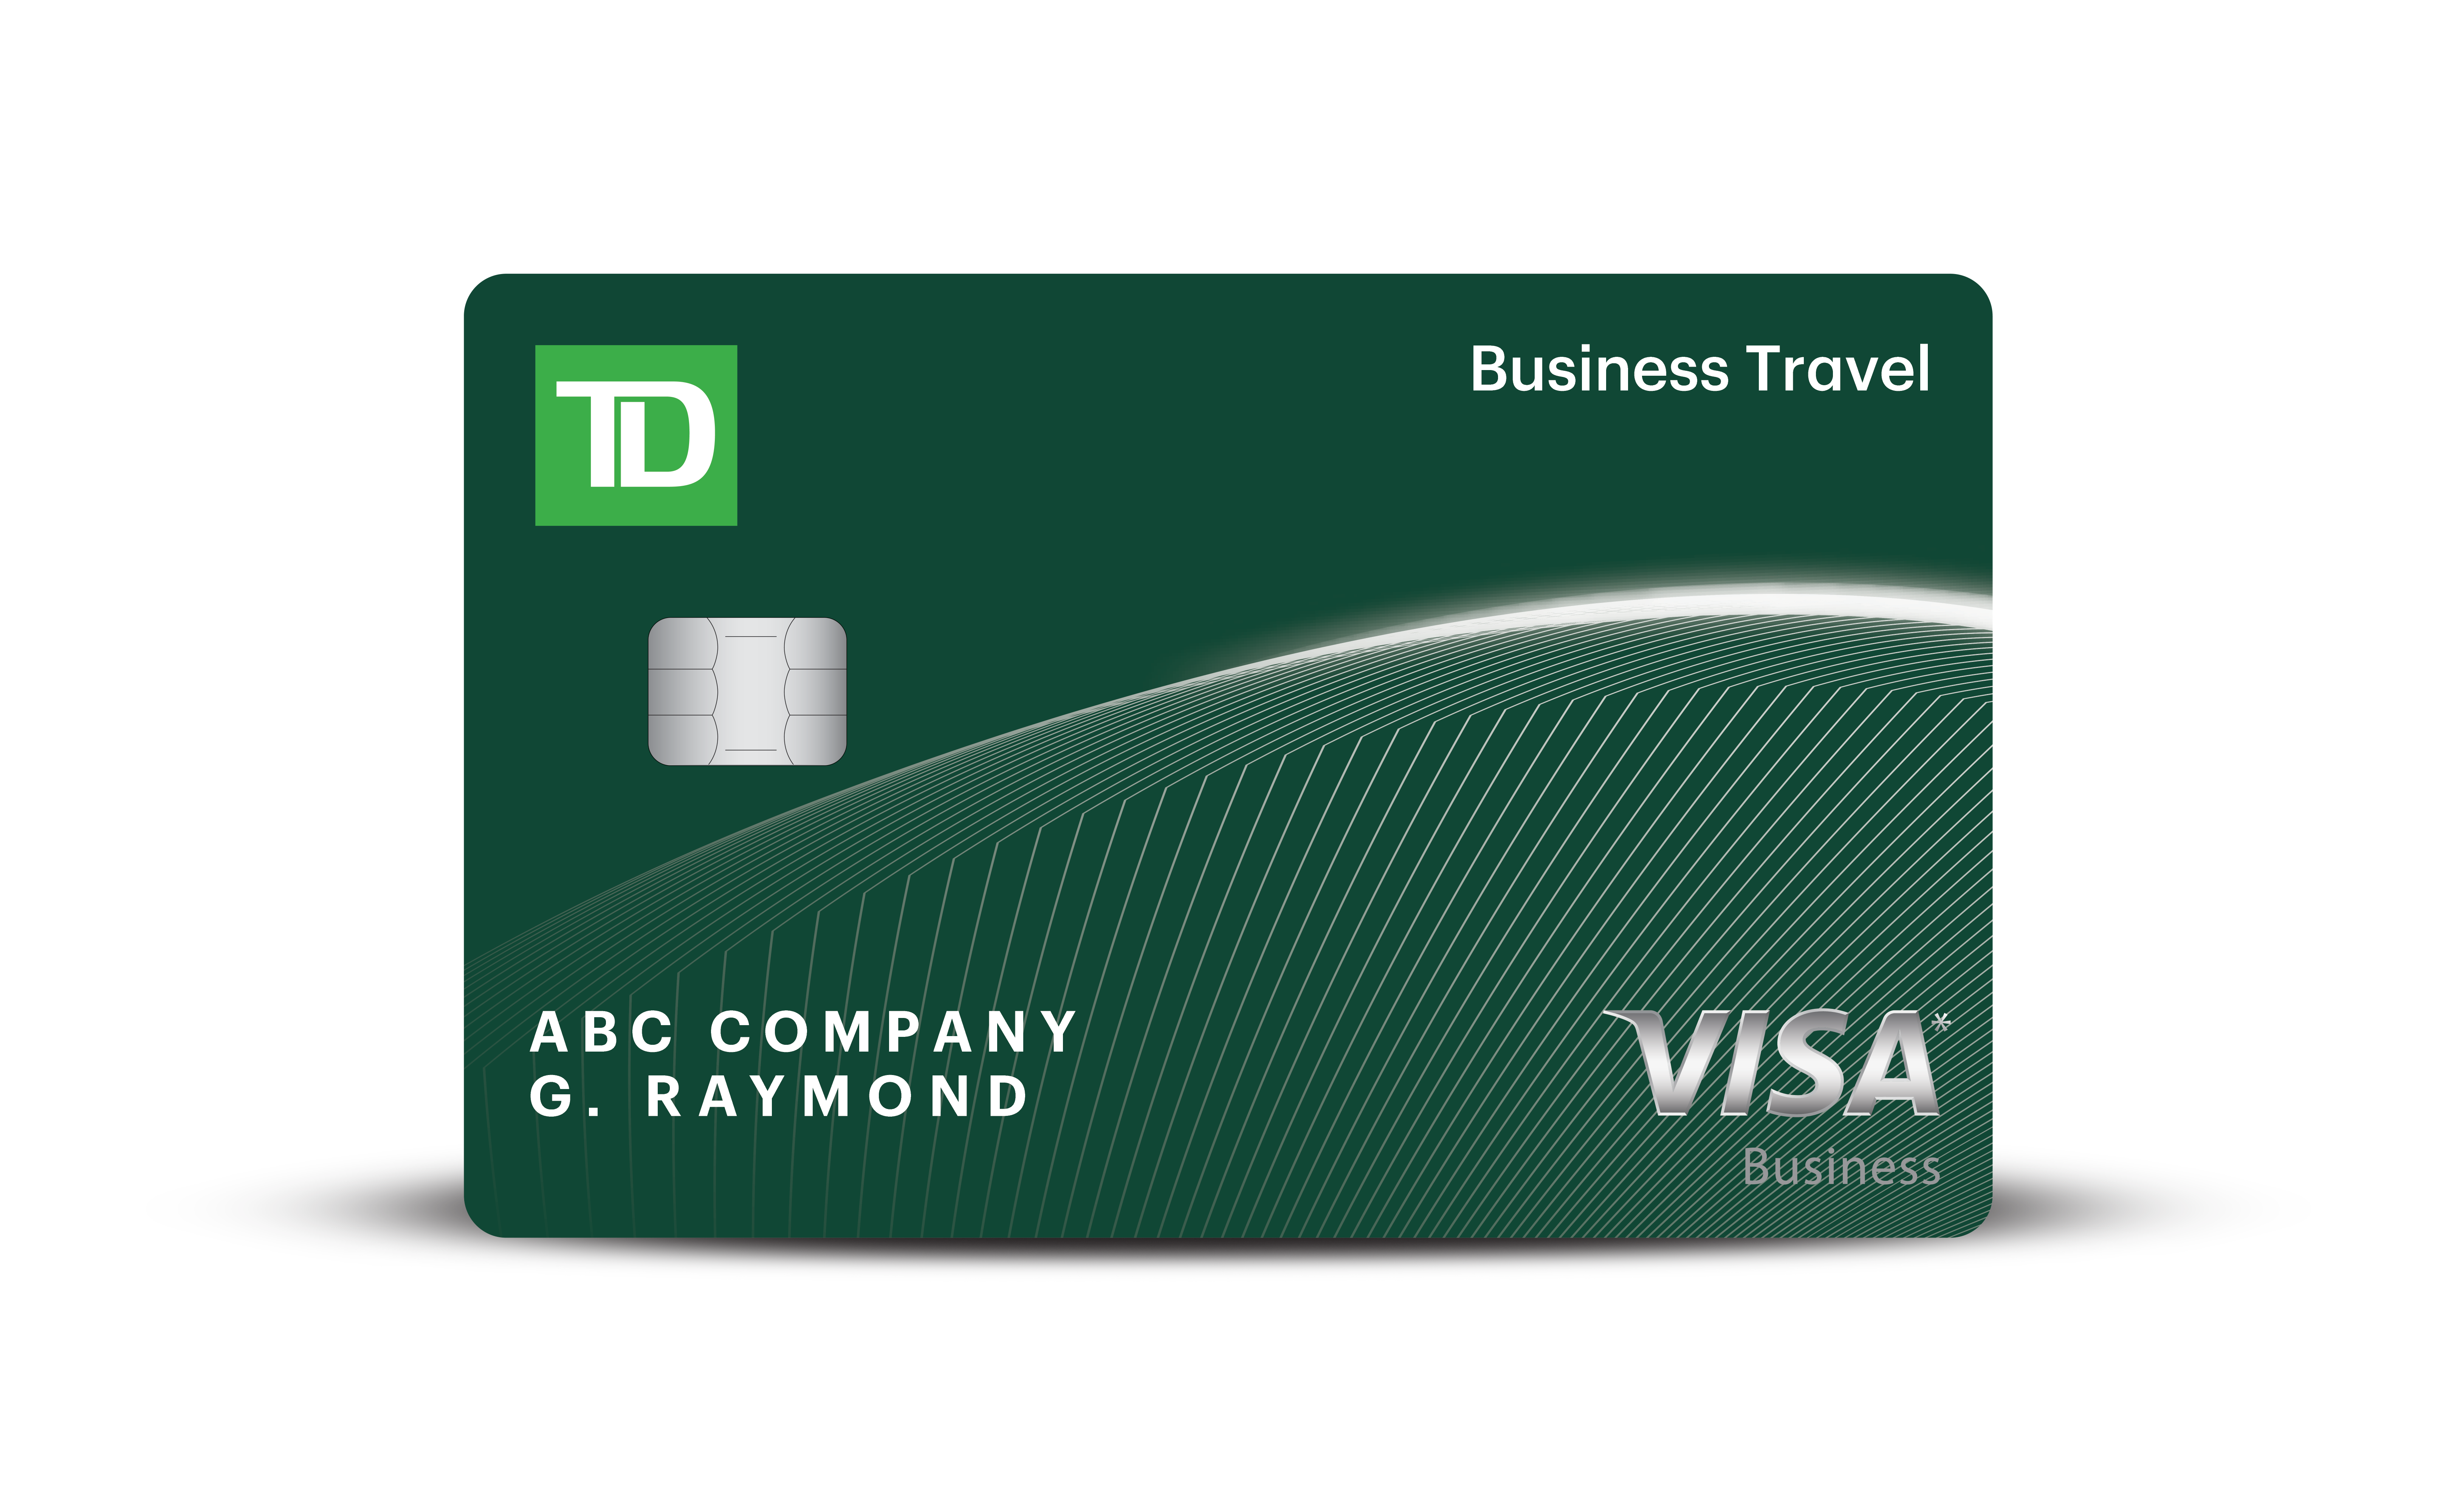 td business travel visa card